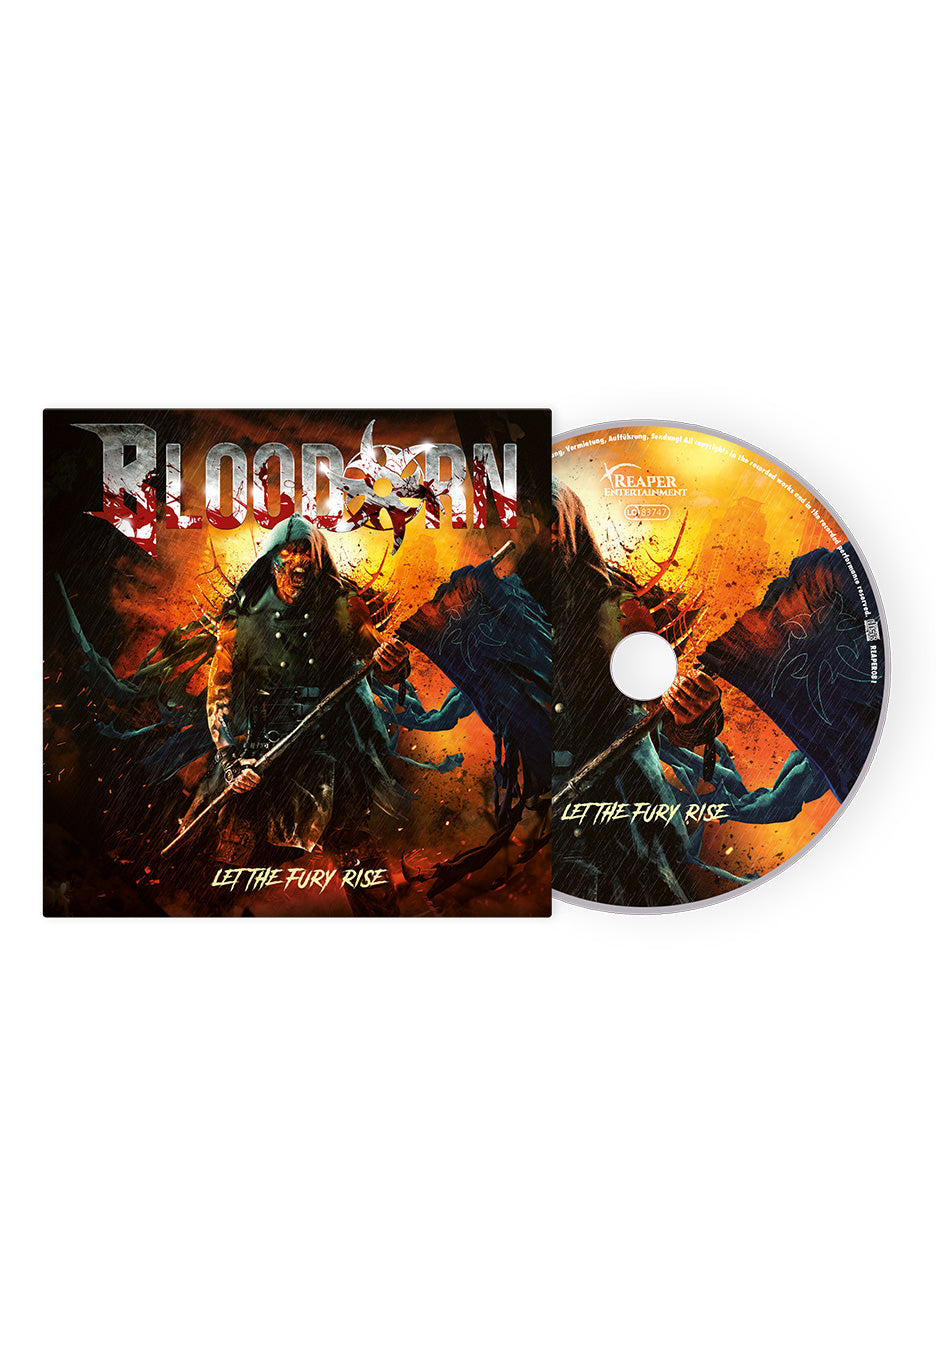 Bloodorn - Let The Fury Rise - Digipak CD